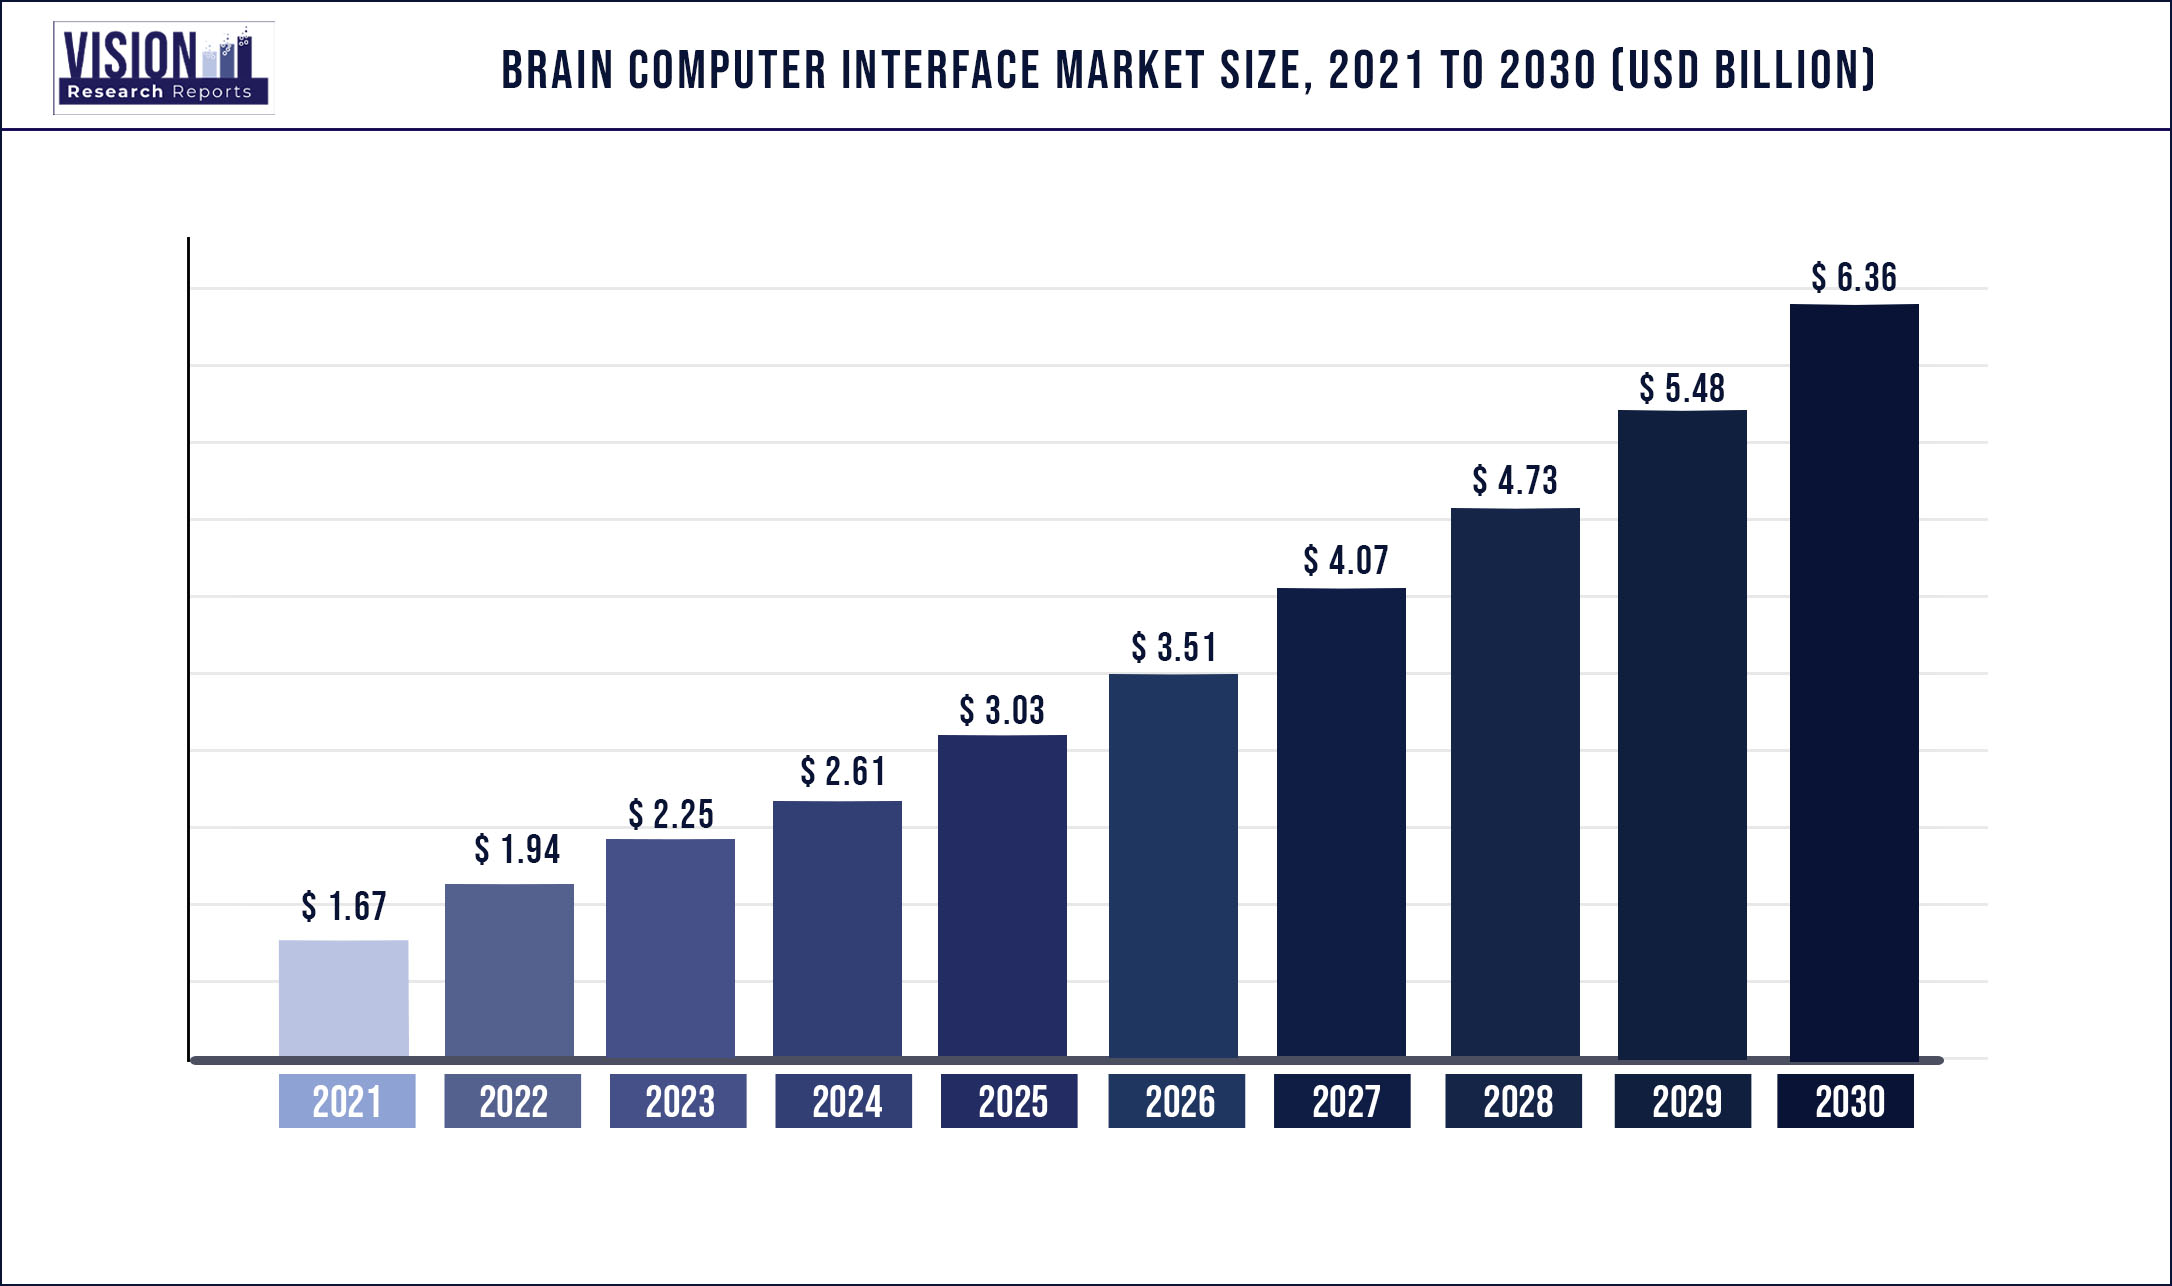 Brain Computer Interface Market Size 2021 to 2030